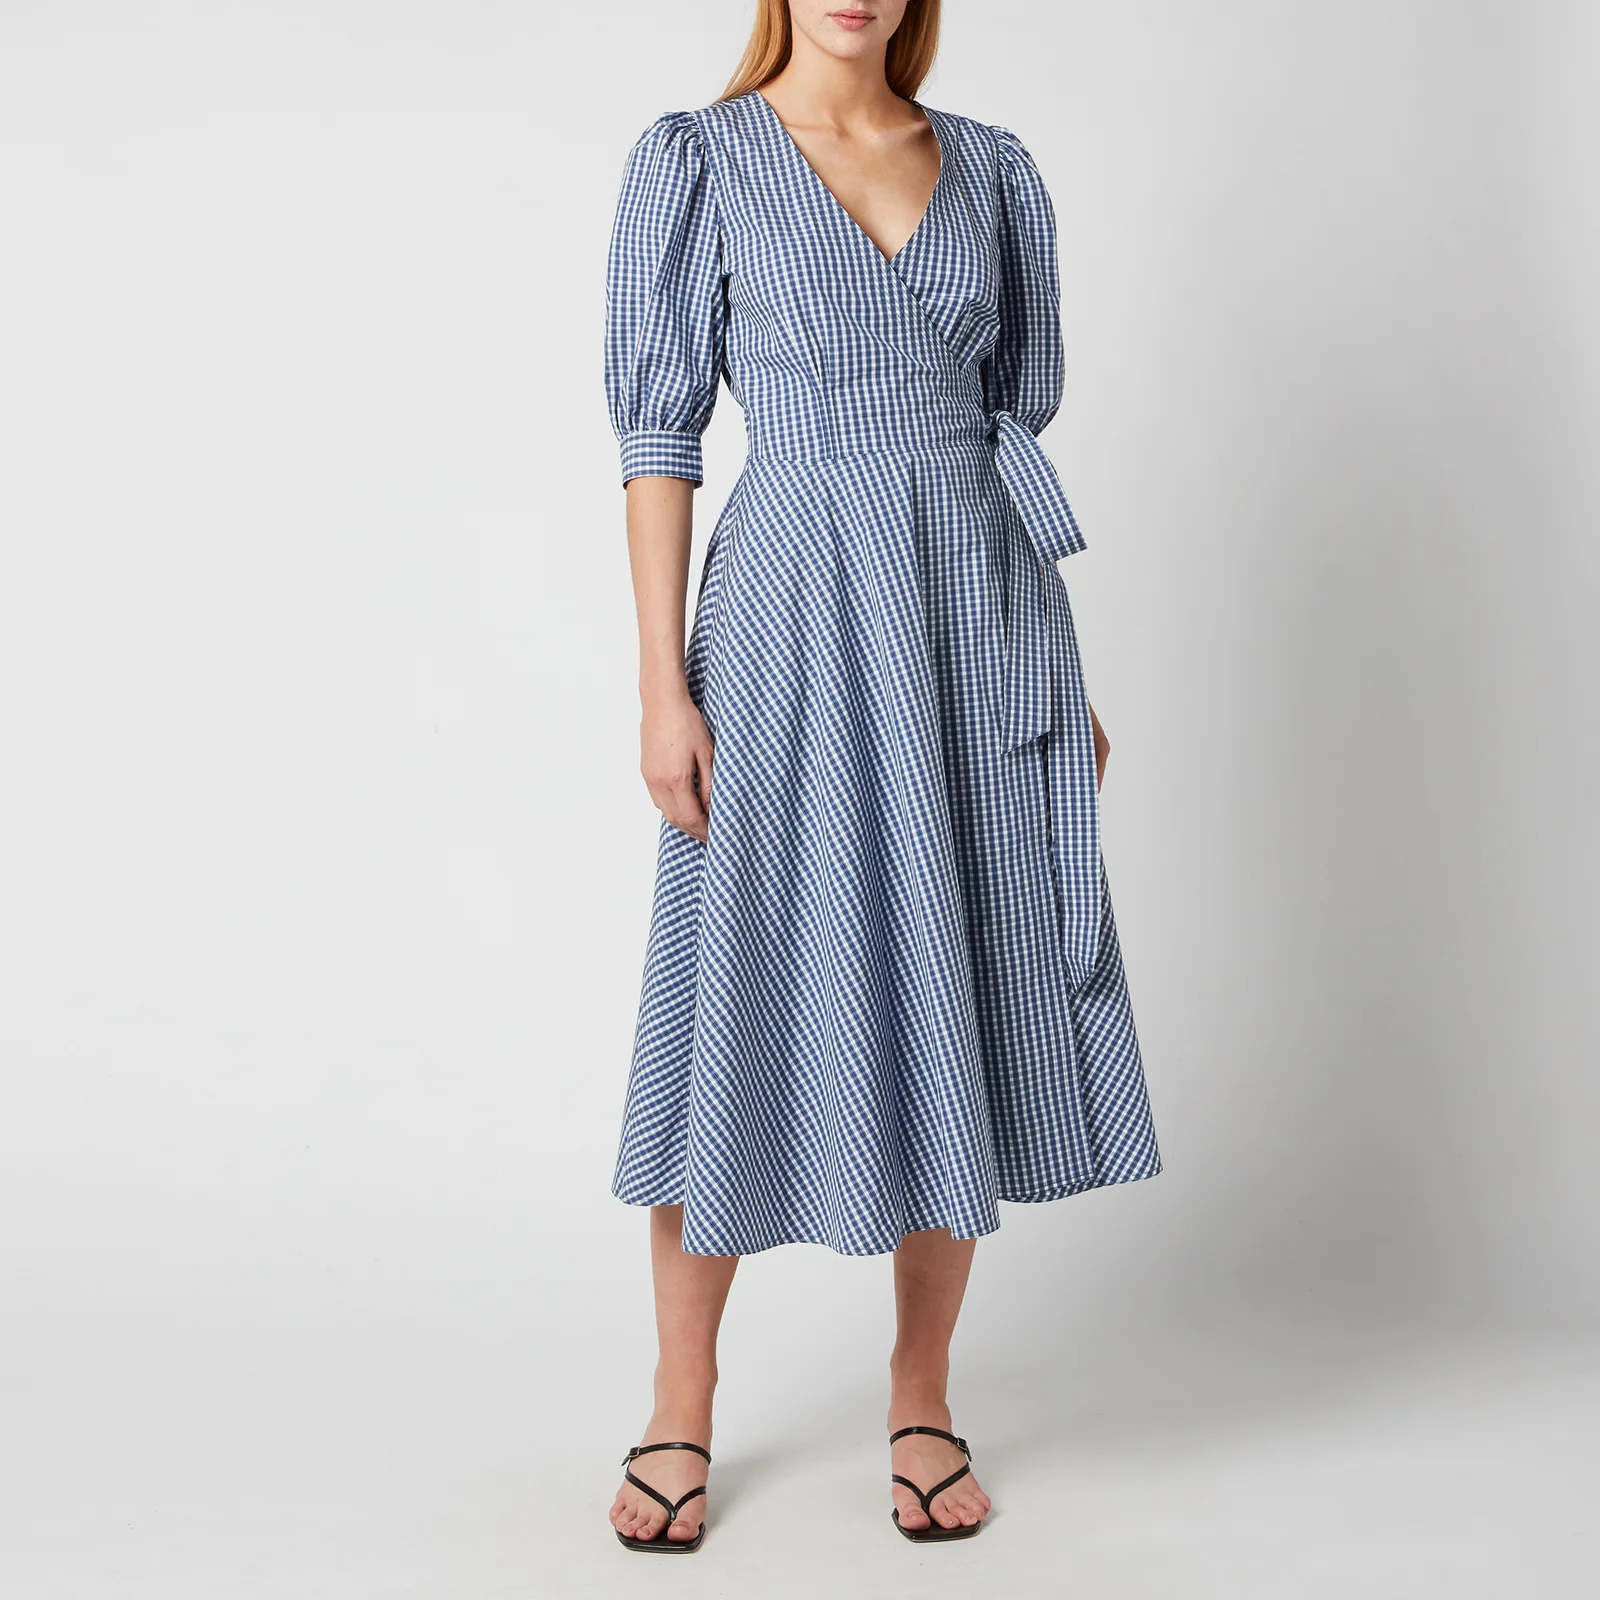 Polo Ralph Lauren Women's Wrap Dress - Blue/White Plaid Image 1